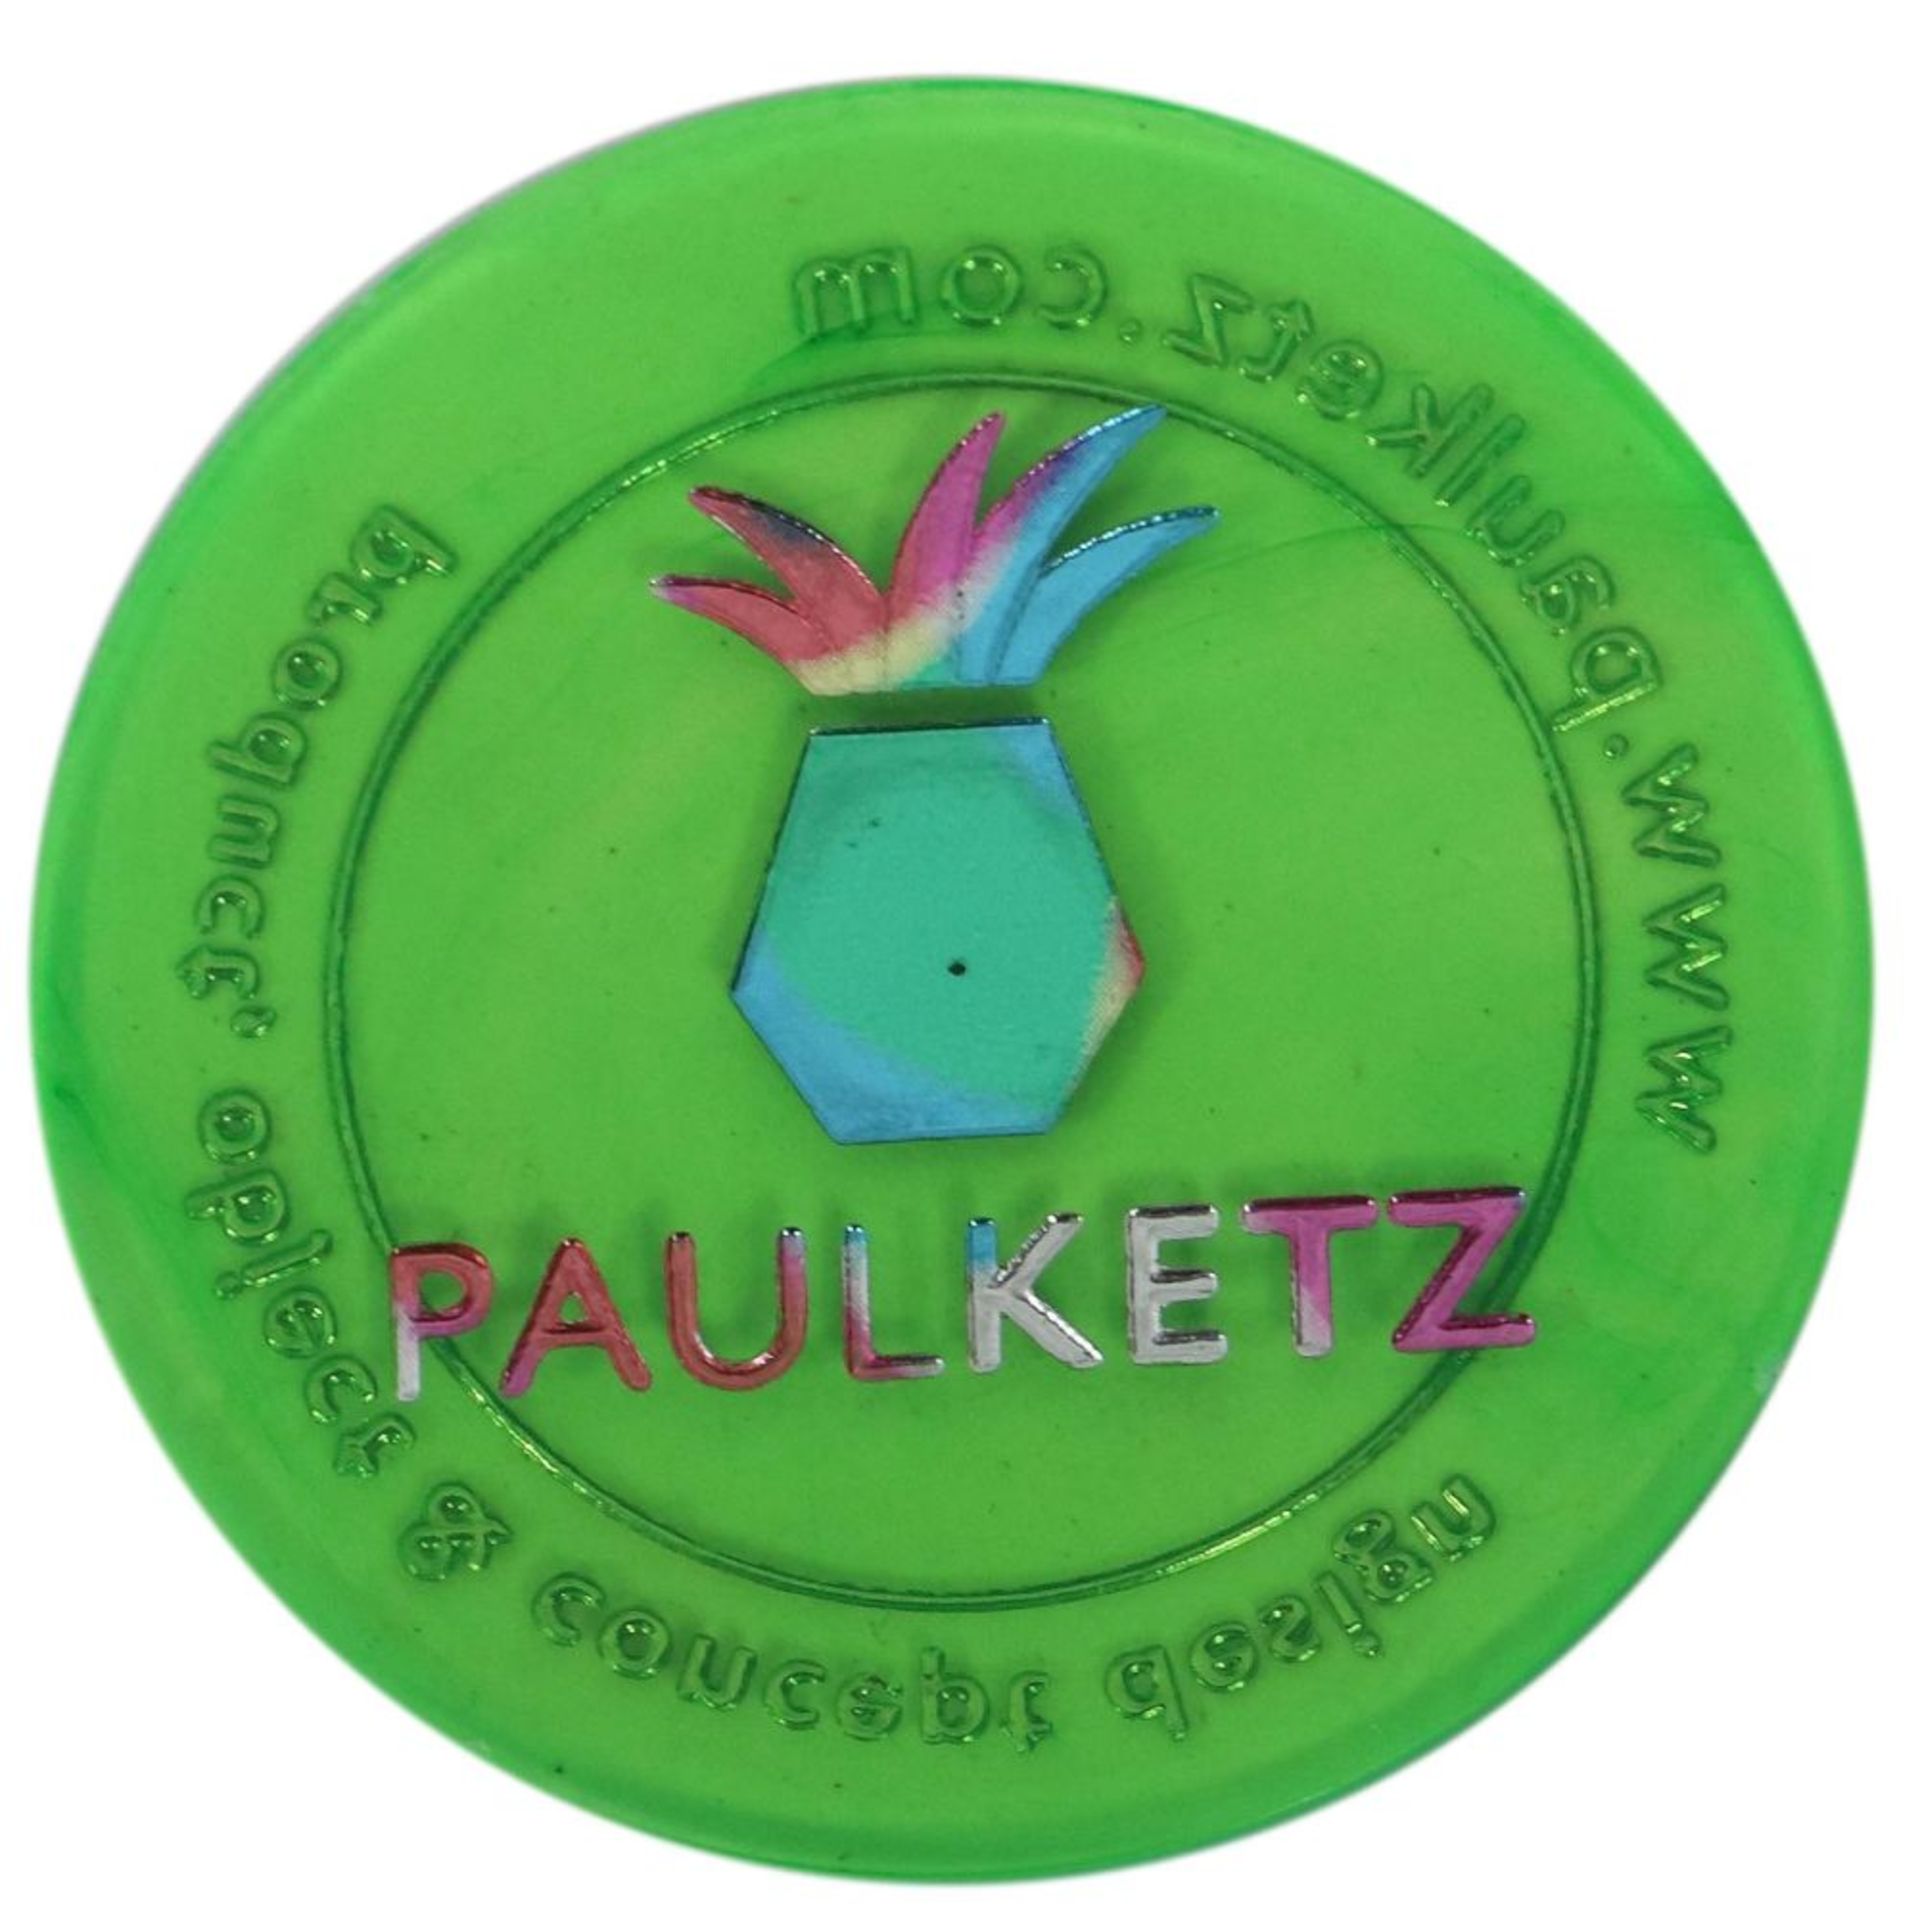 Ketz, Paul Produktdesigner aus Köln. - Bild 2 aus 3